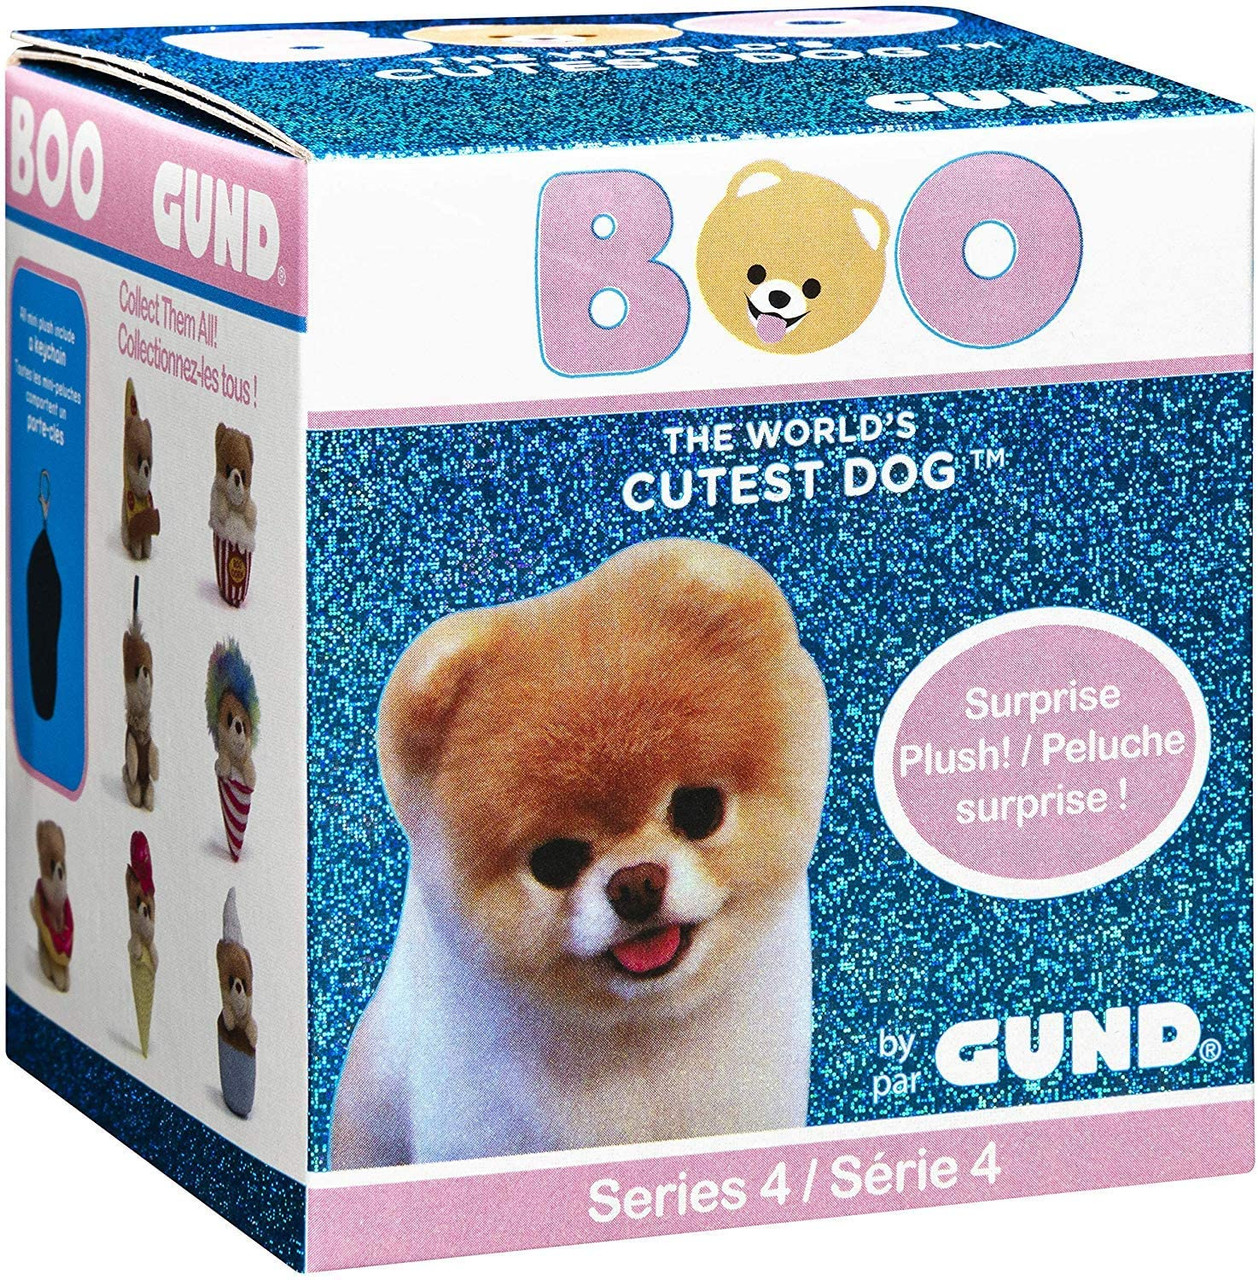 GUND Boo, The World's Cutest Dog Ladybug Plush Pomeranian Stuffed